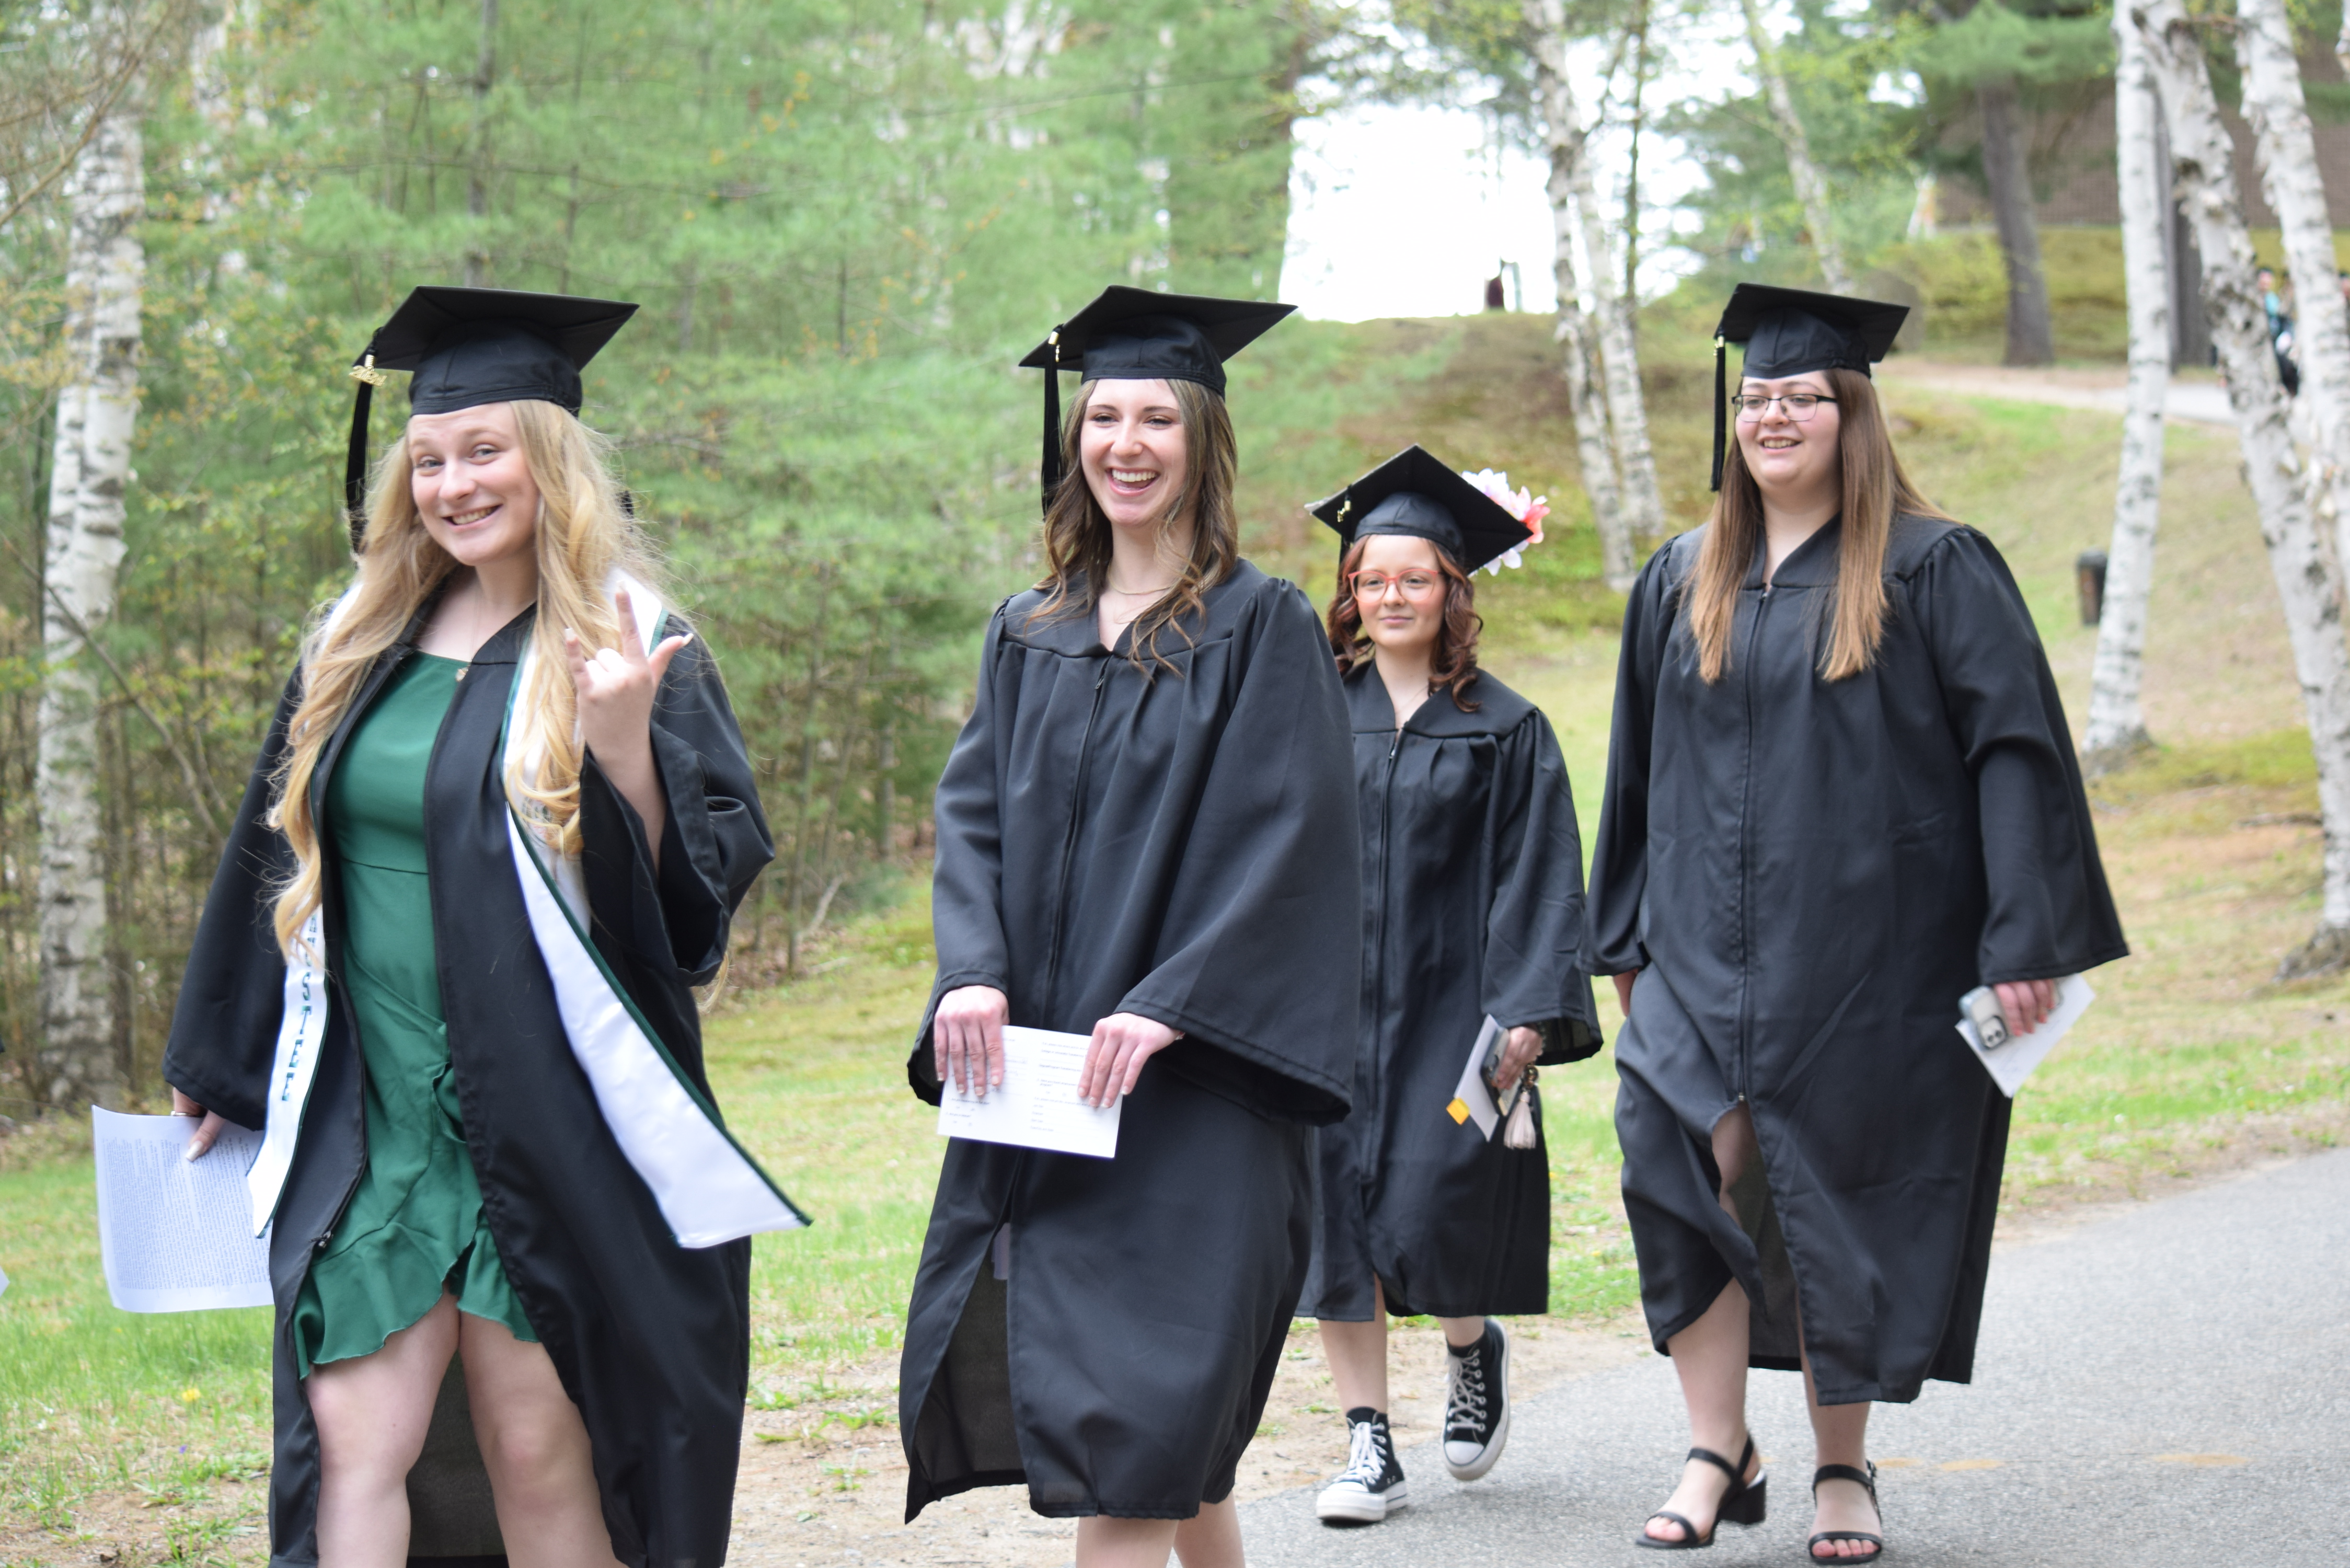 Students in graduation attire smile at the camera